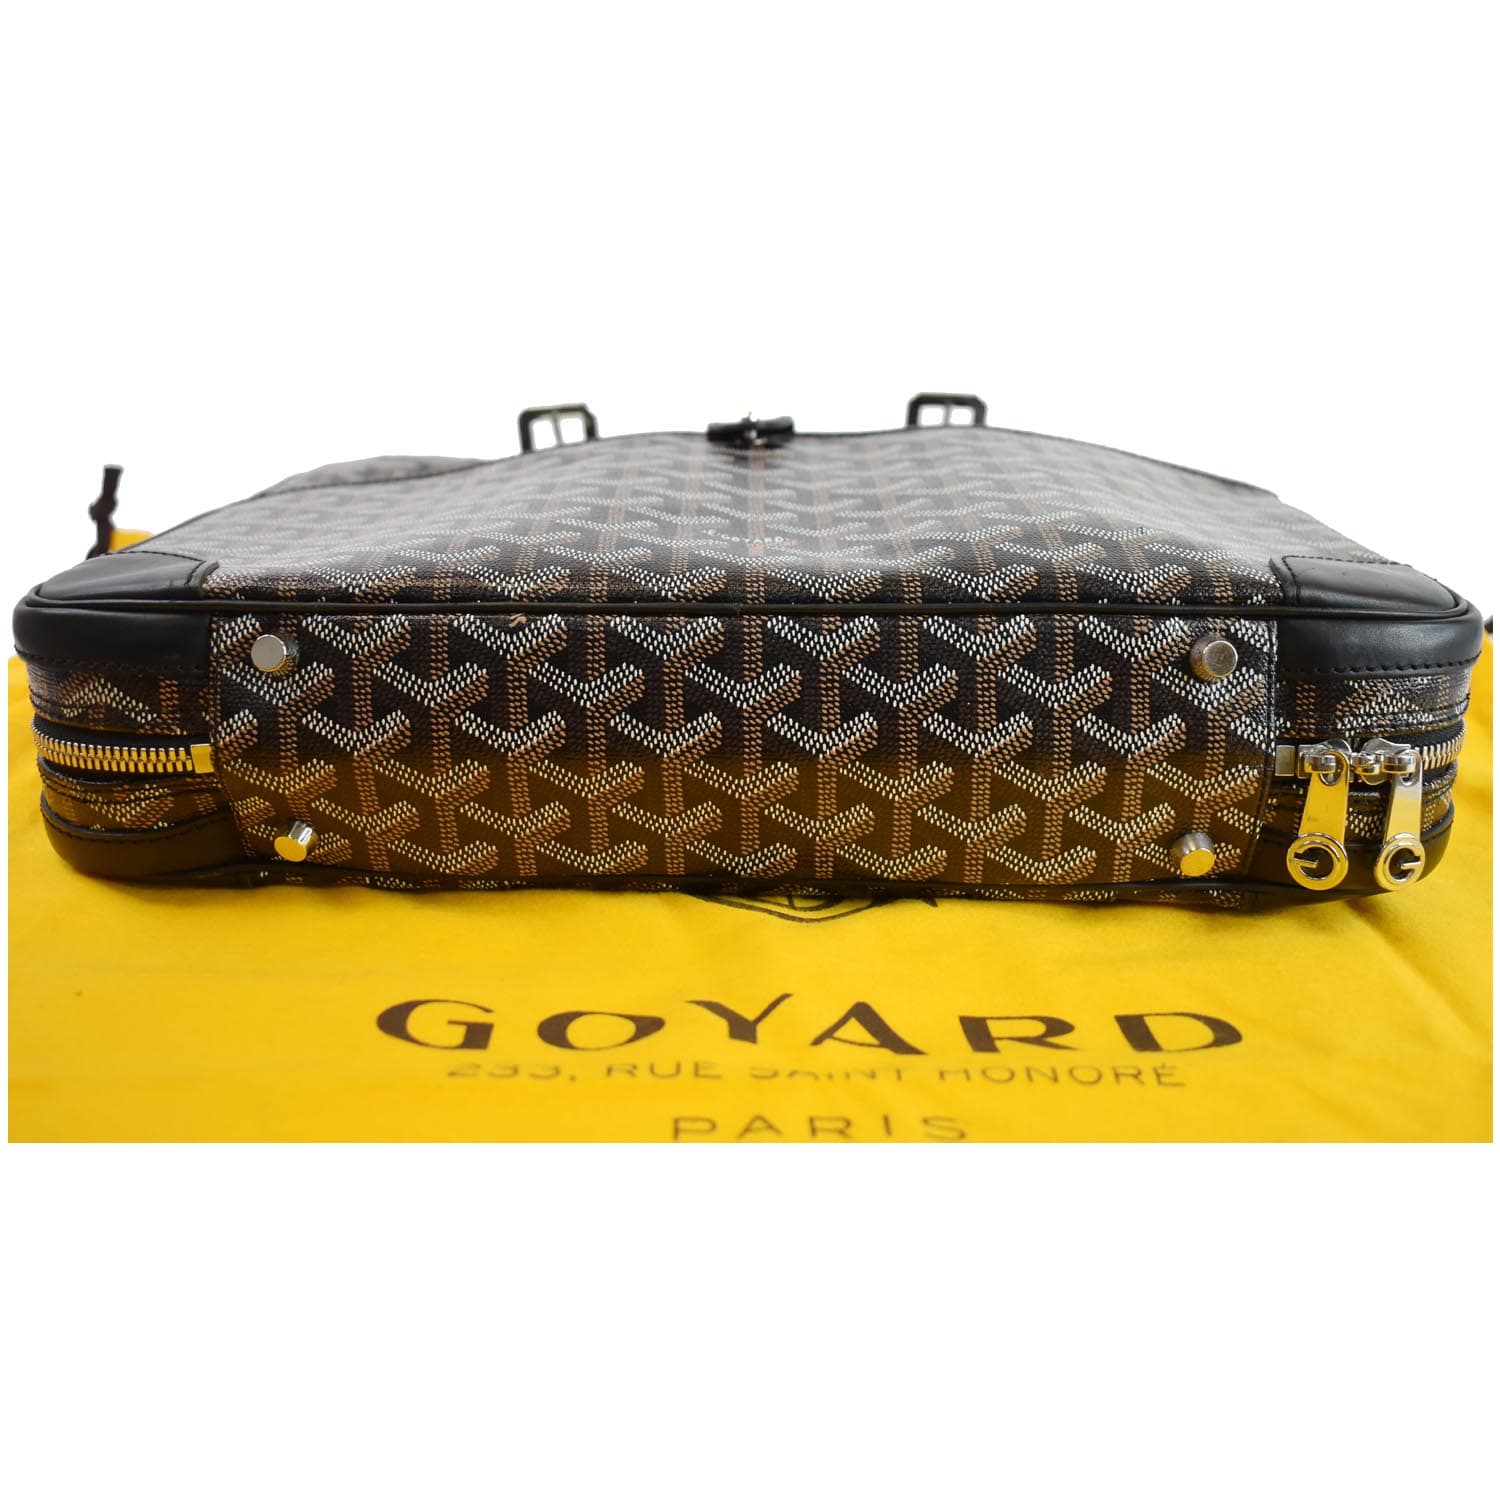 Goyard Leather Tote Bags